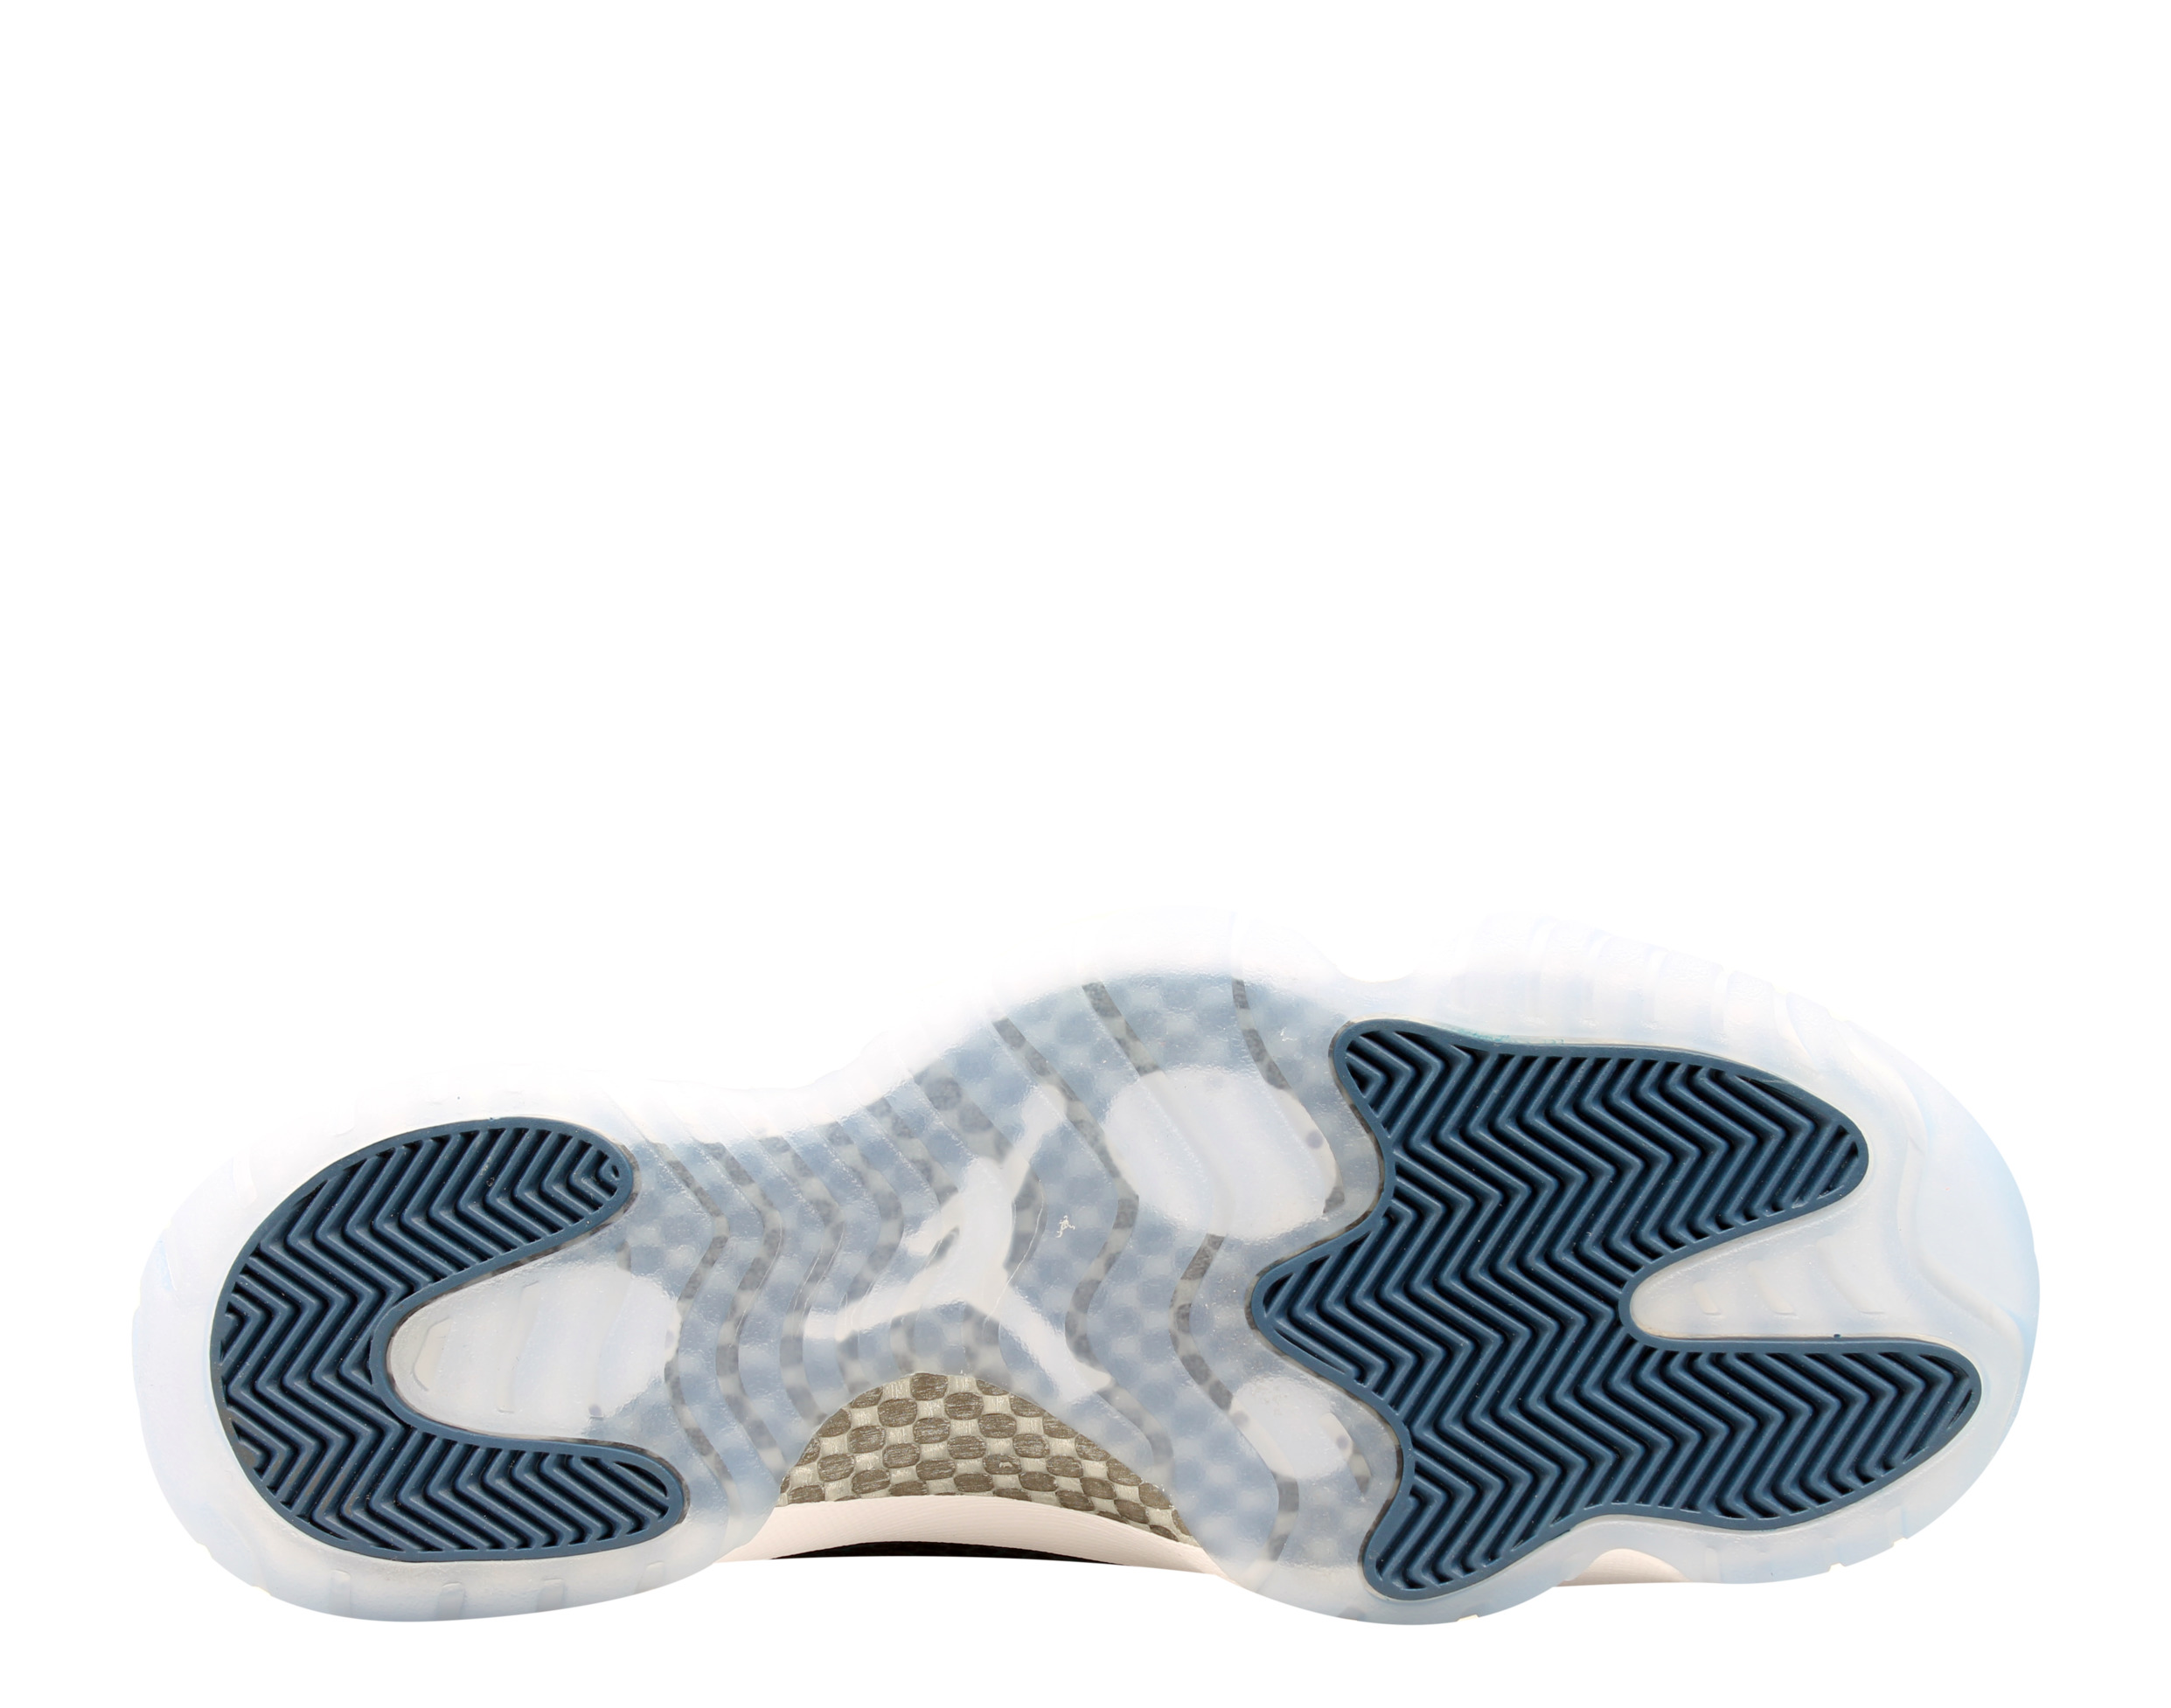 Nike Air Jordan 11 Retro Low LE Men's Basketball Shoes Size 10 - image 5 of 6